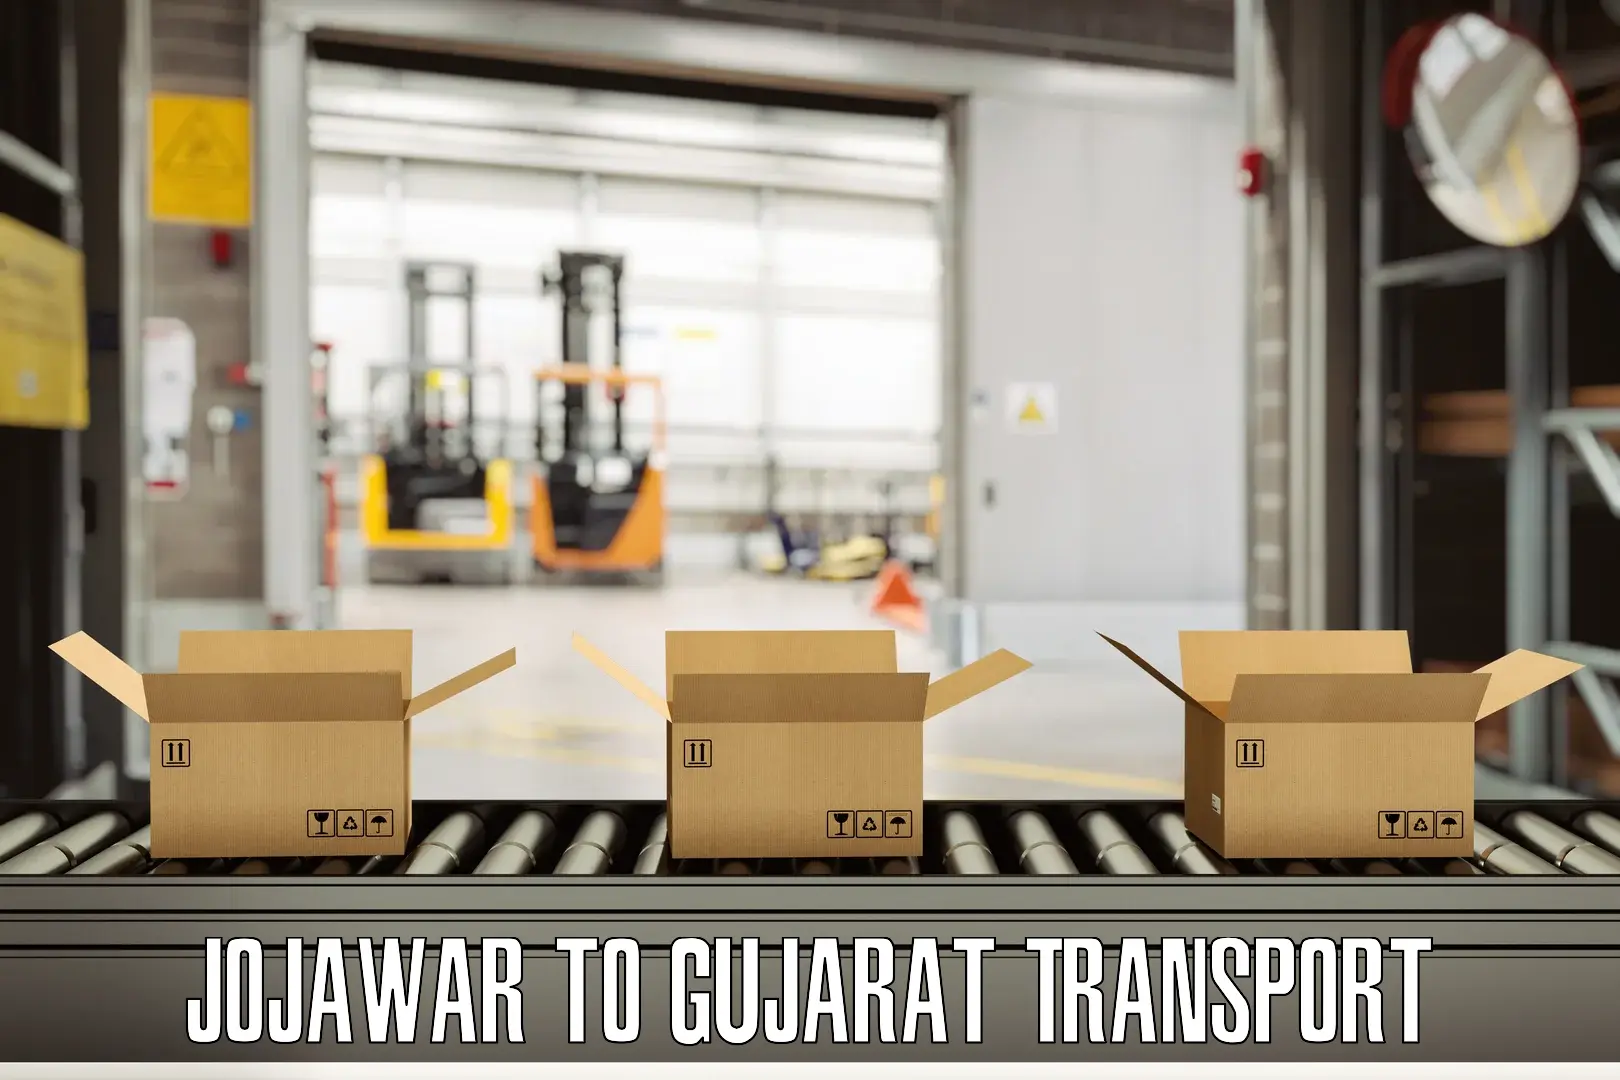 Transport shared services in Jojawar to Gujarat